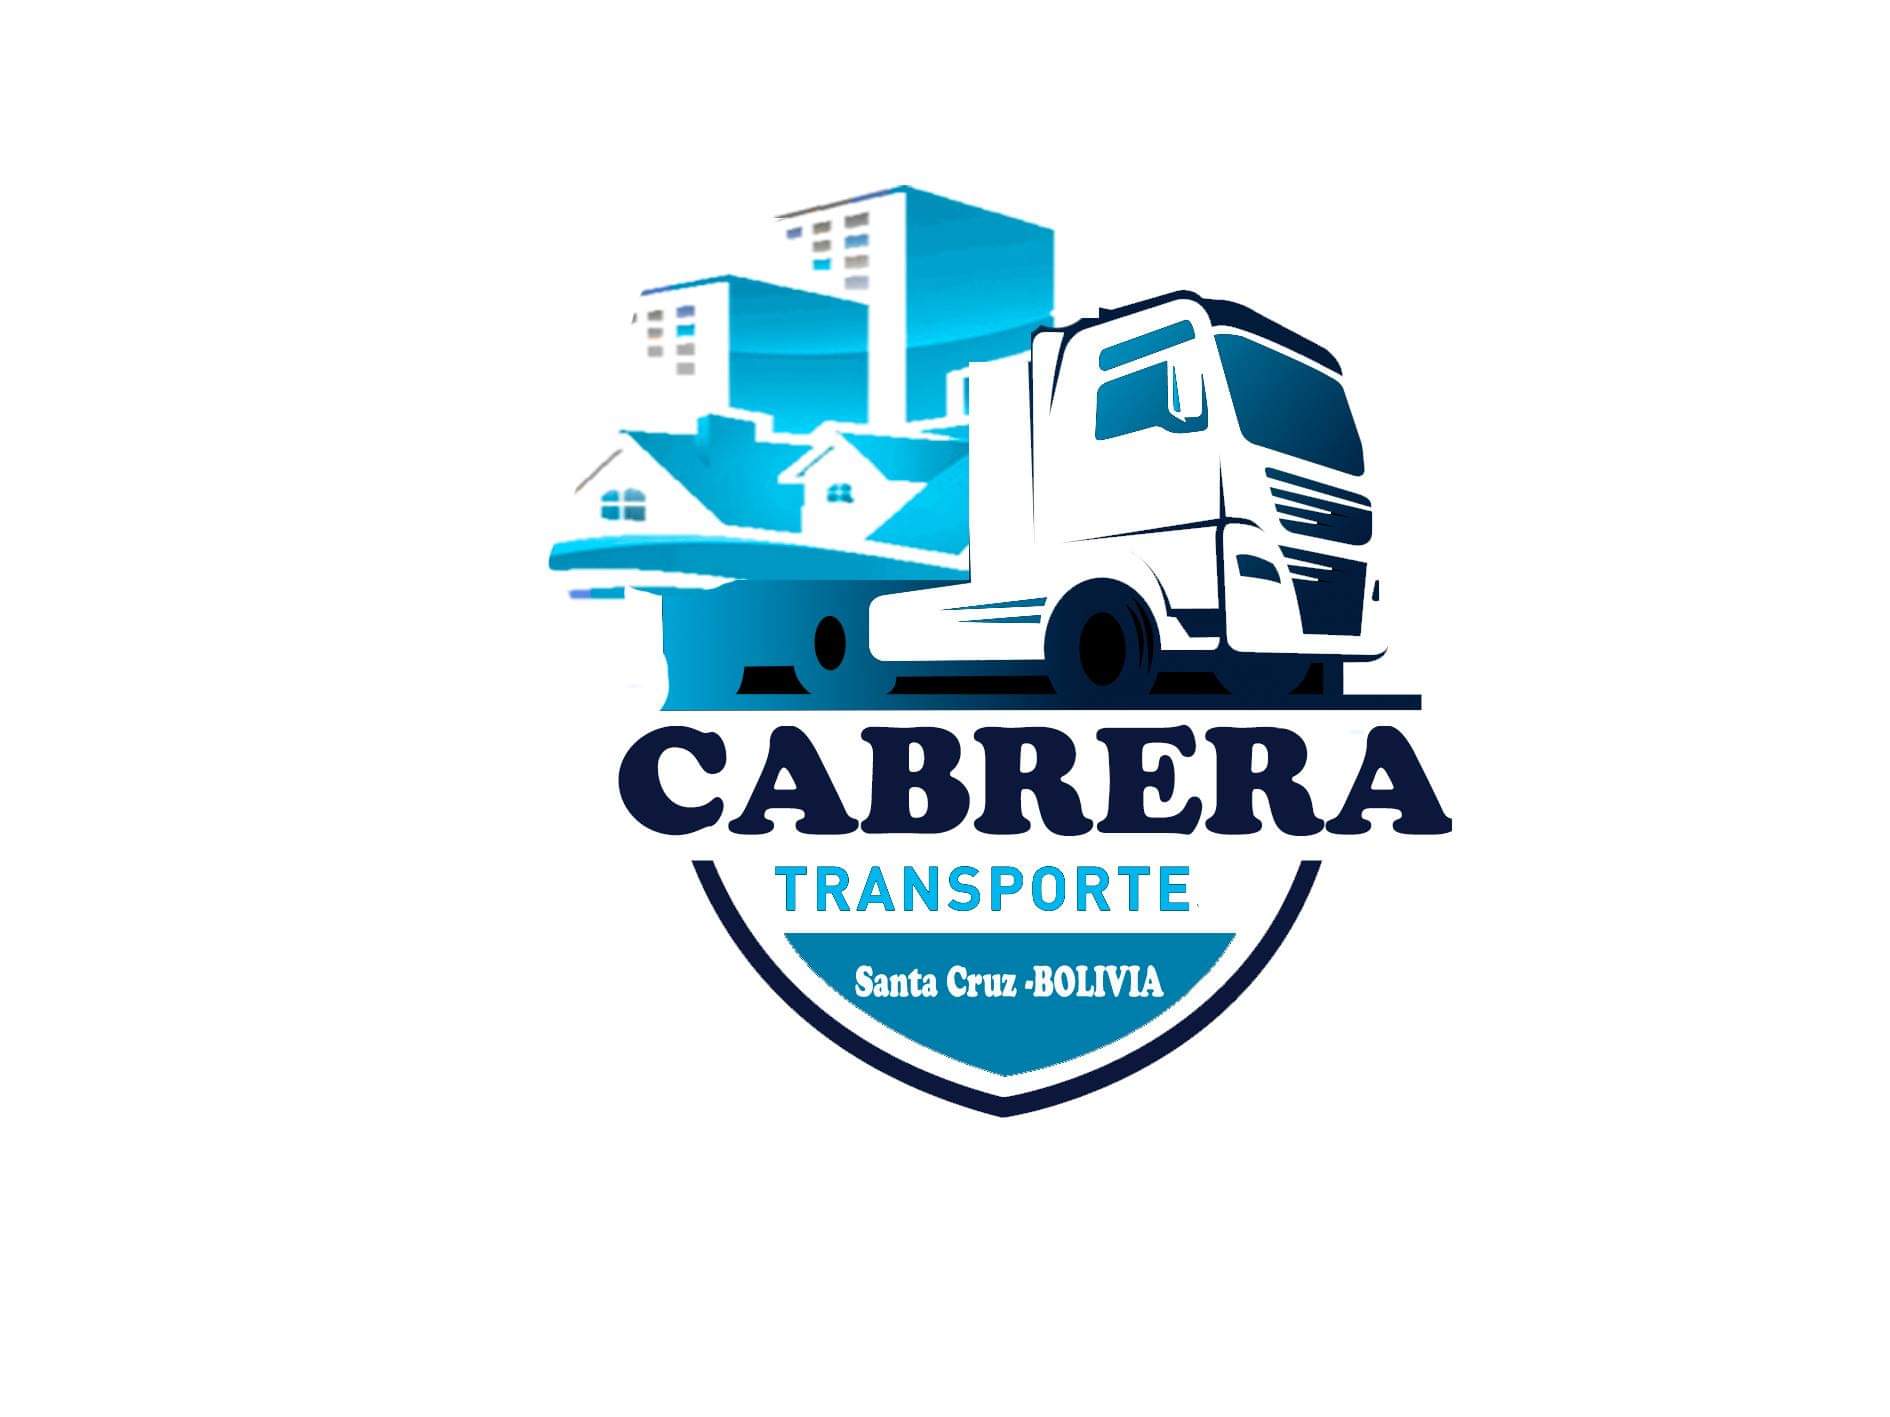 Cabrera Transporte